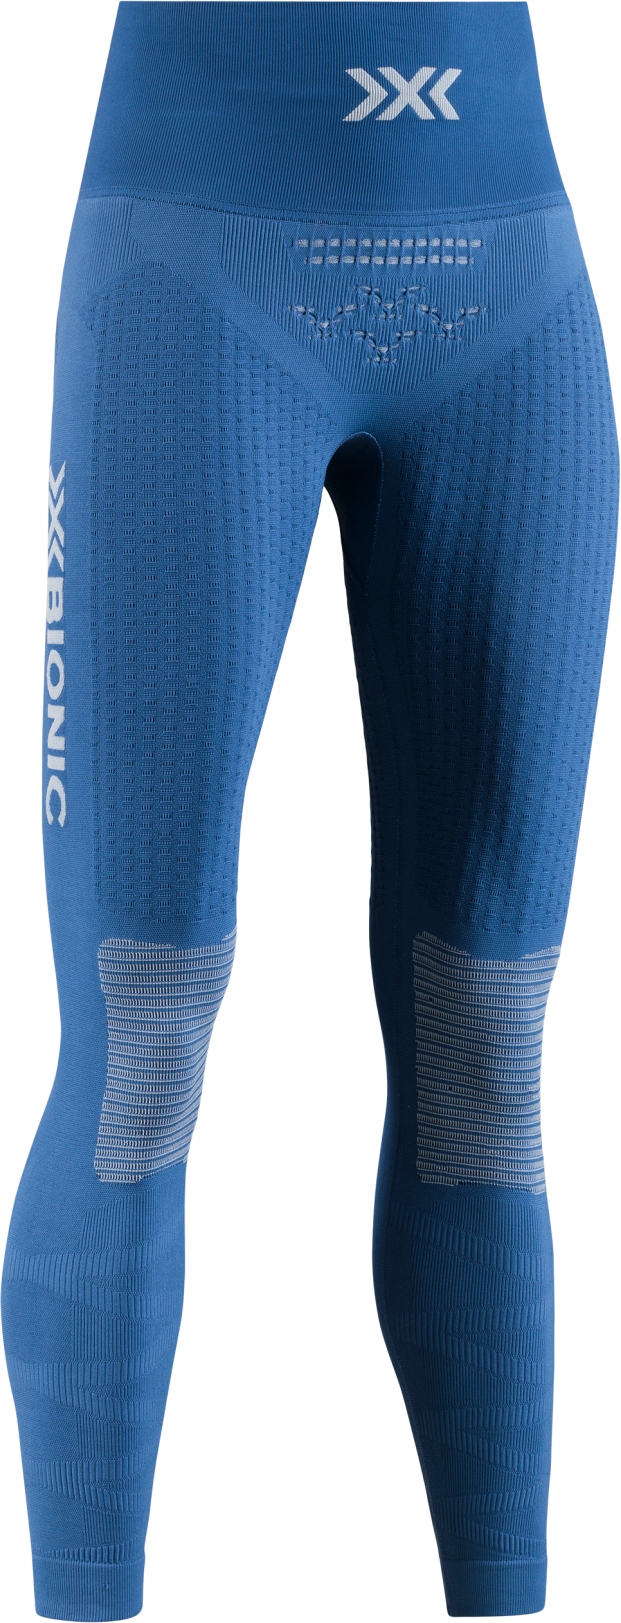 X-Bionic Energizer 4.0 7/8 Fitness Pants Women - jeans blue/pearl